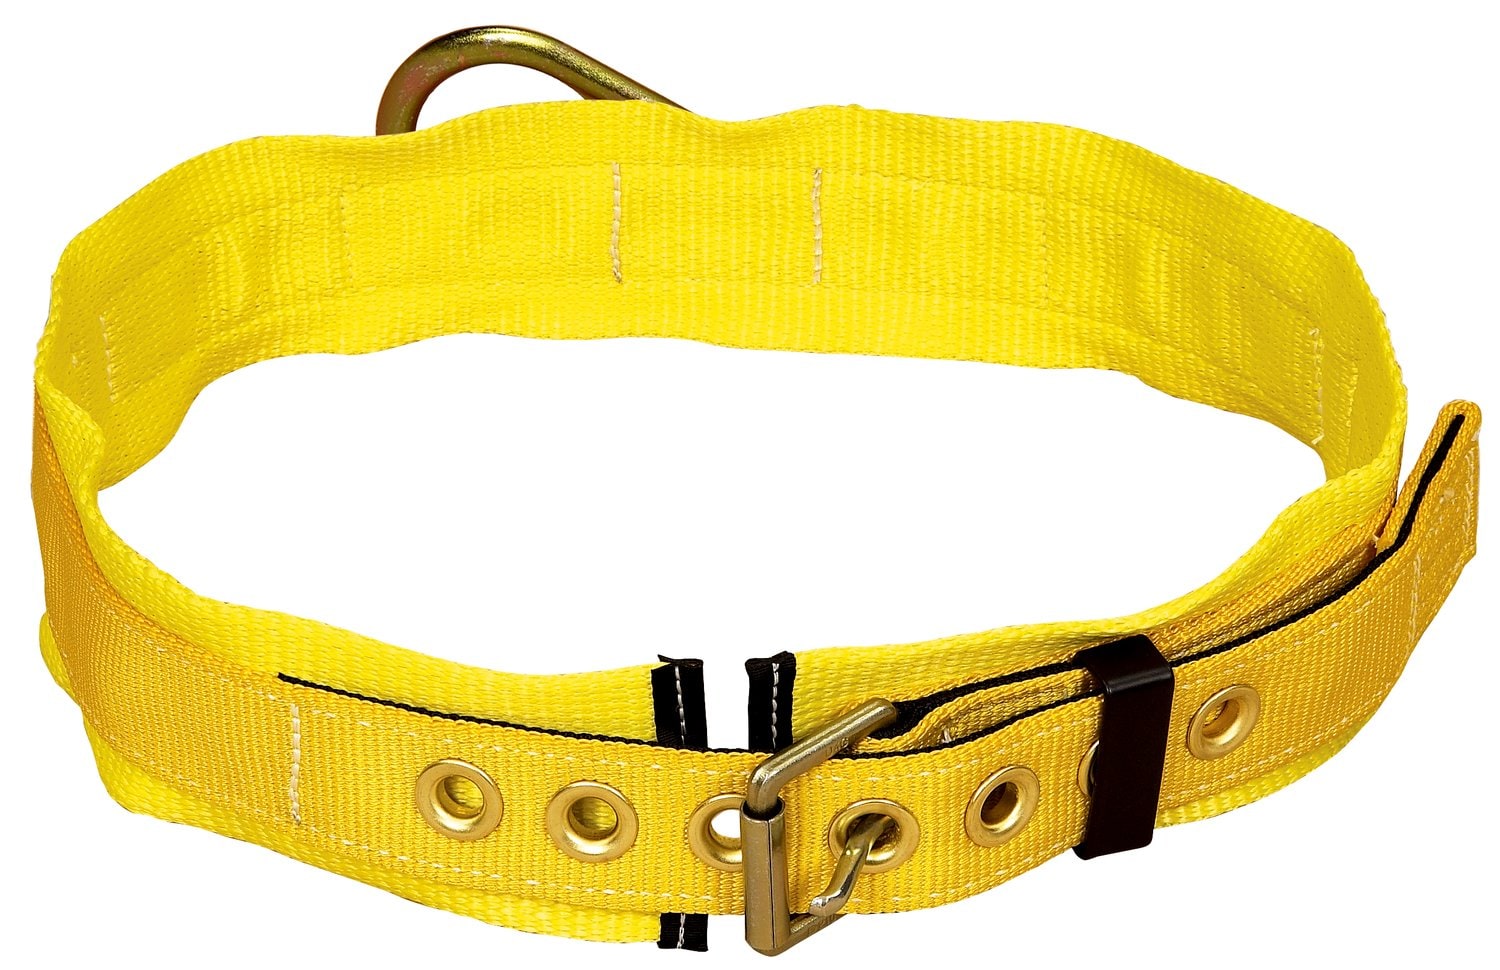 7012814934 - 3M DBI-SALA Tongue Buckle Restraint Belt with Hip Pad 1000008, Yellow, 4X